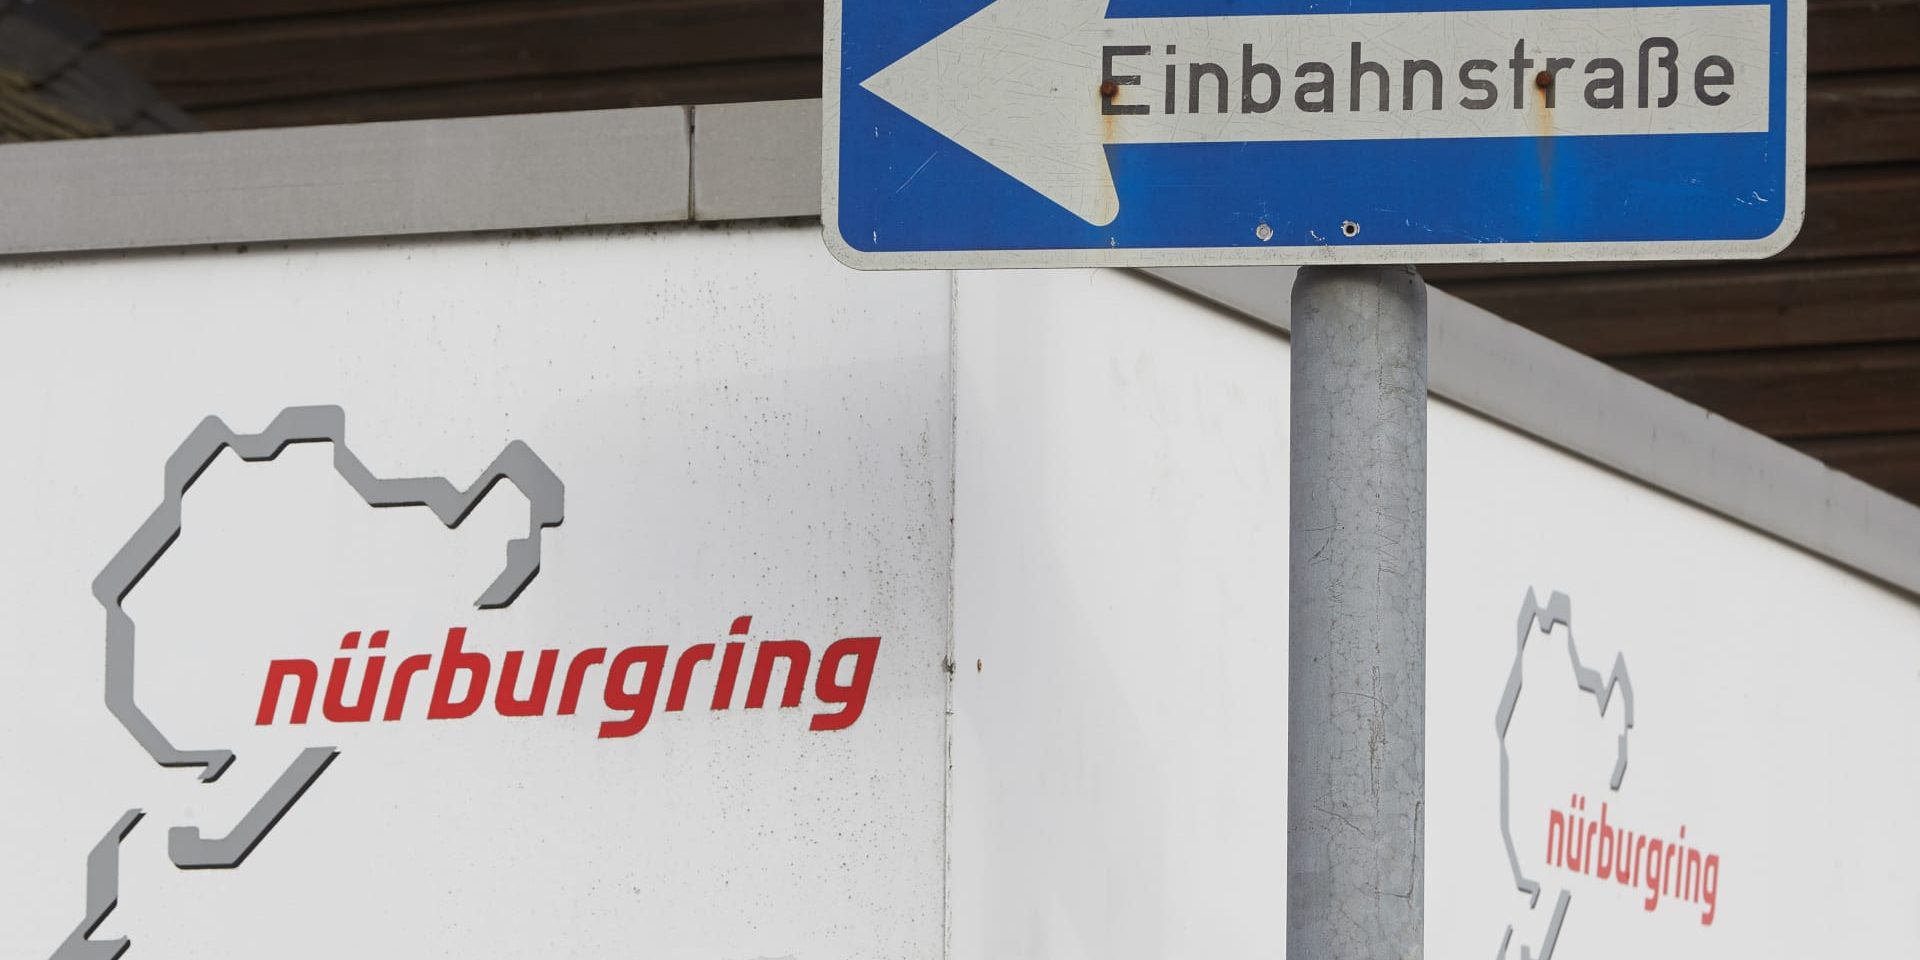 Two tyre engineers killed in car crash at Nurburgring circuit in Germany